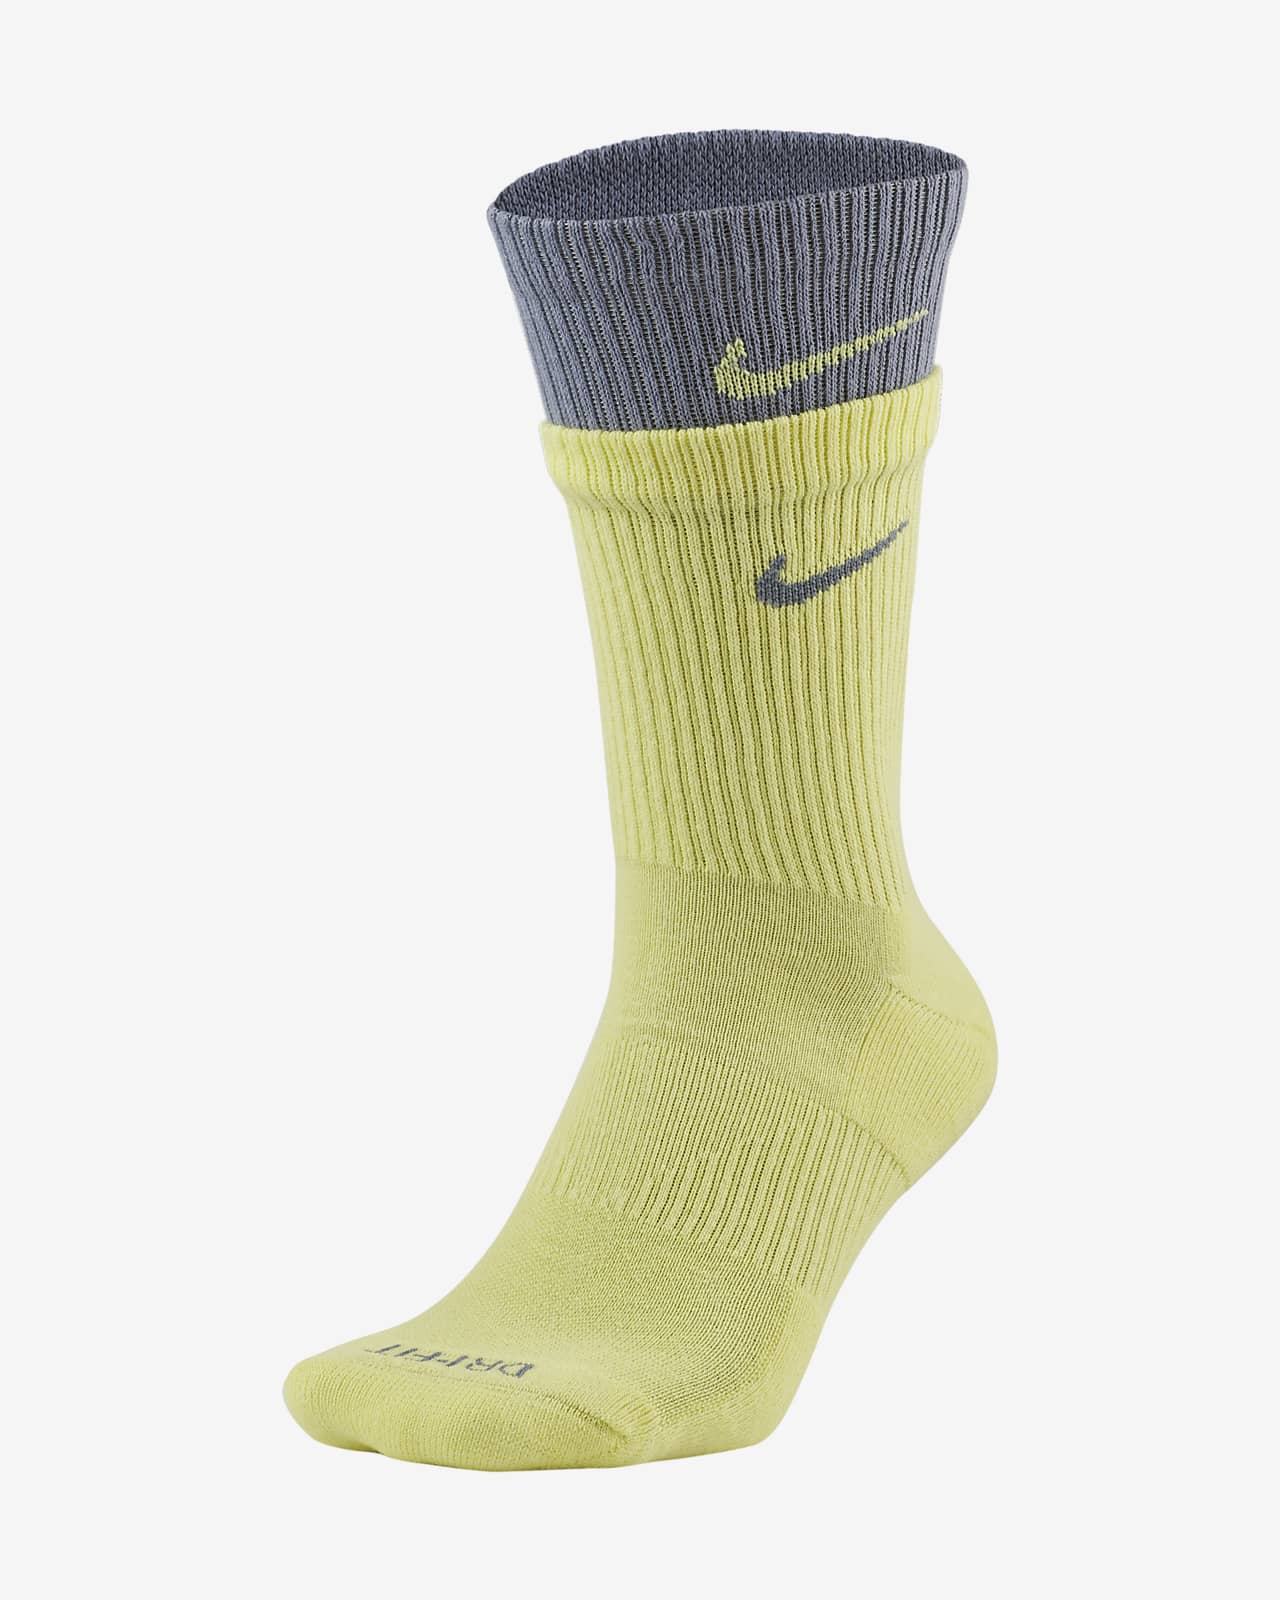 white and yellow nike socks